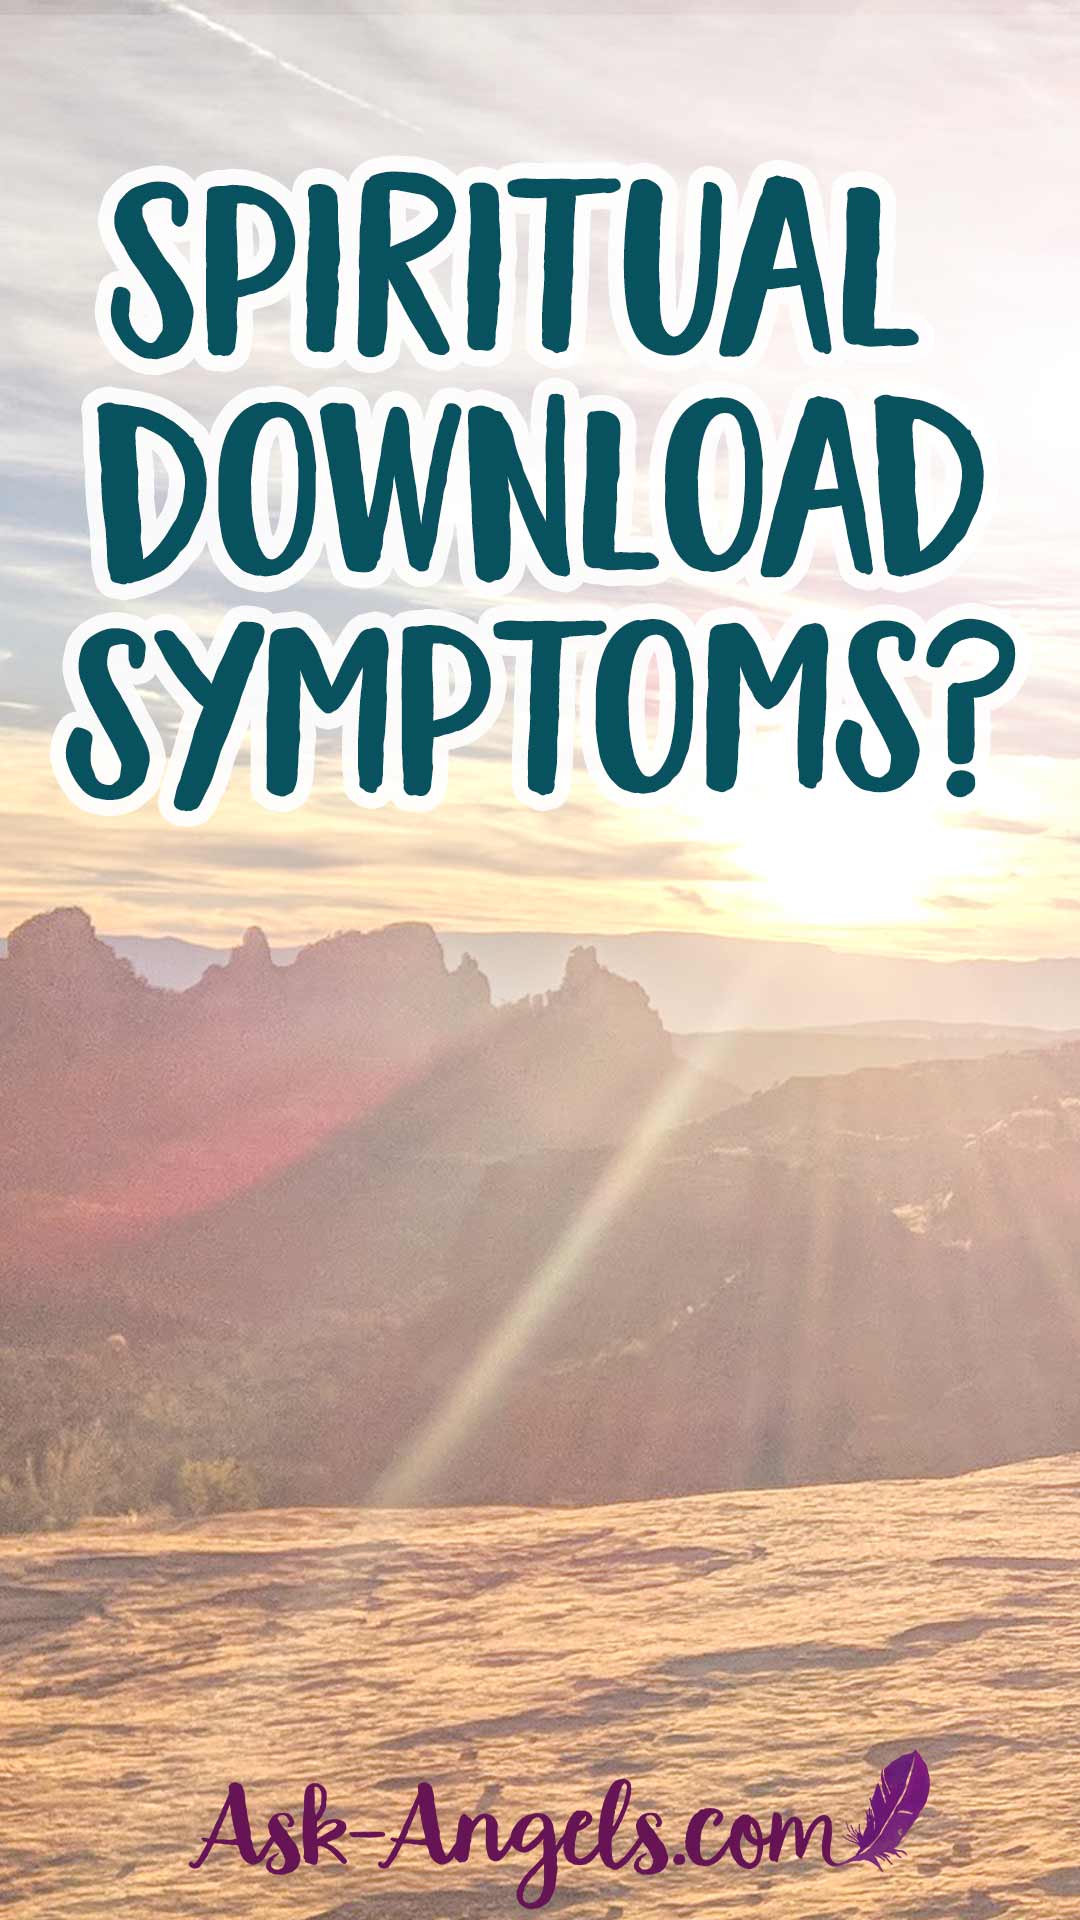 Spiritual Download Symptoms? Read this!